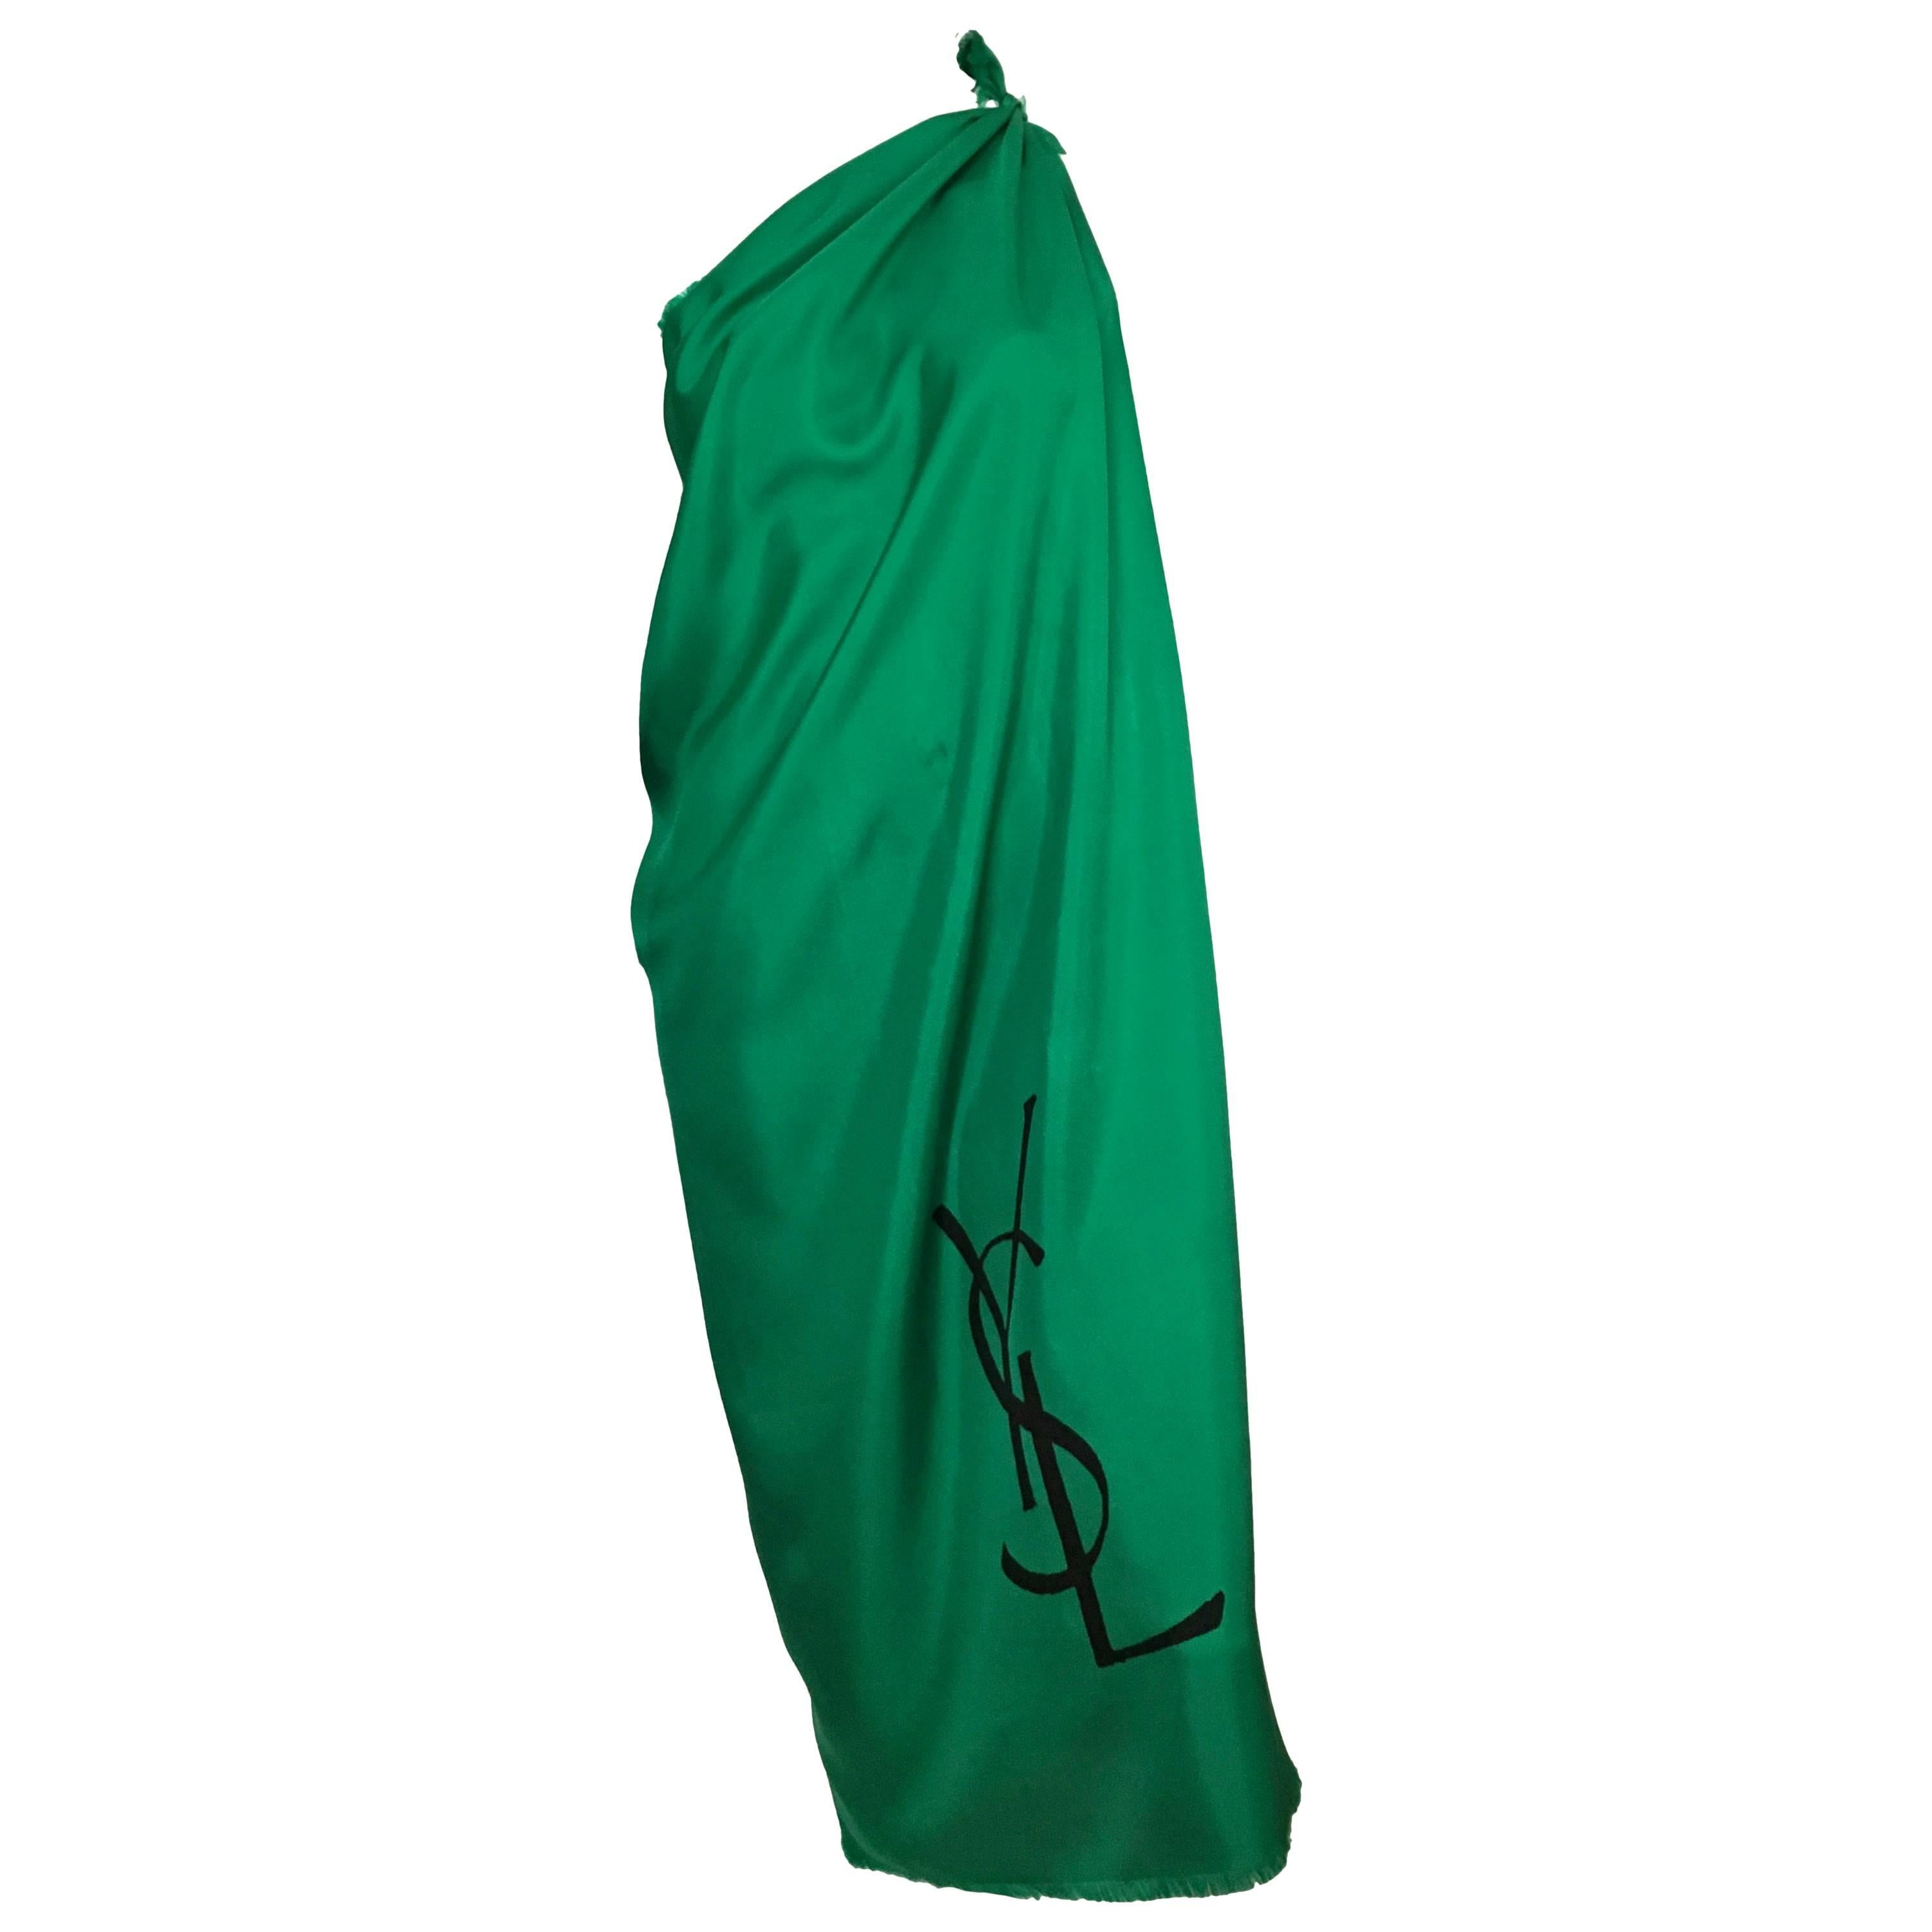 Yves Saint Laurent Emerald Green Silk Large Scarf.